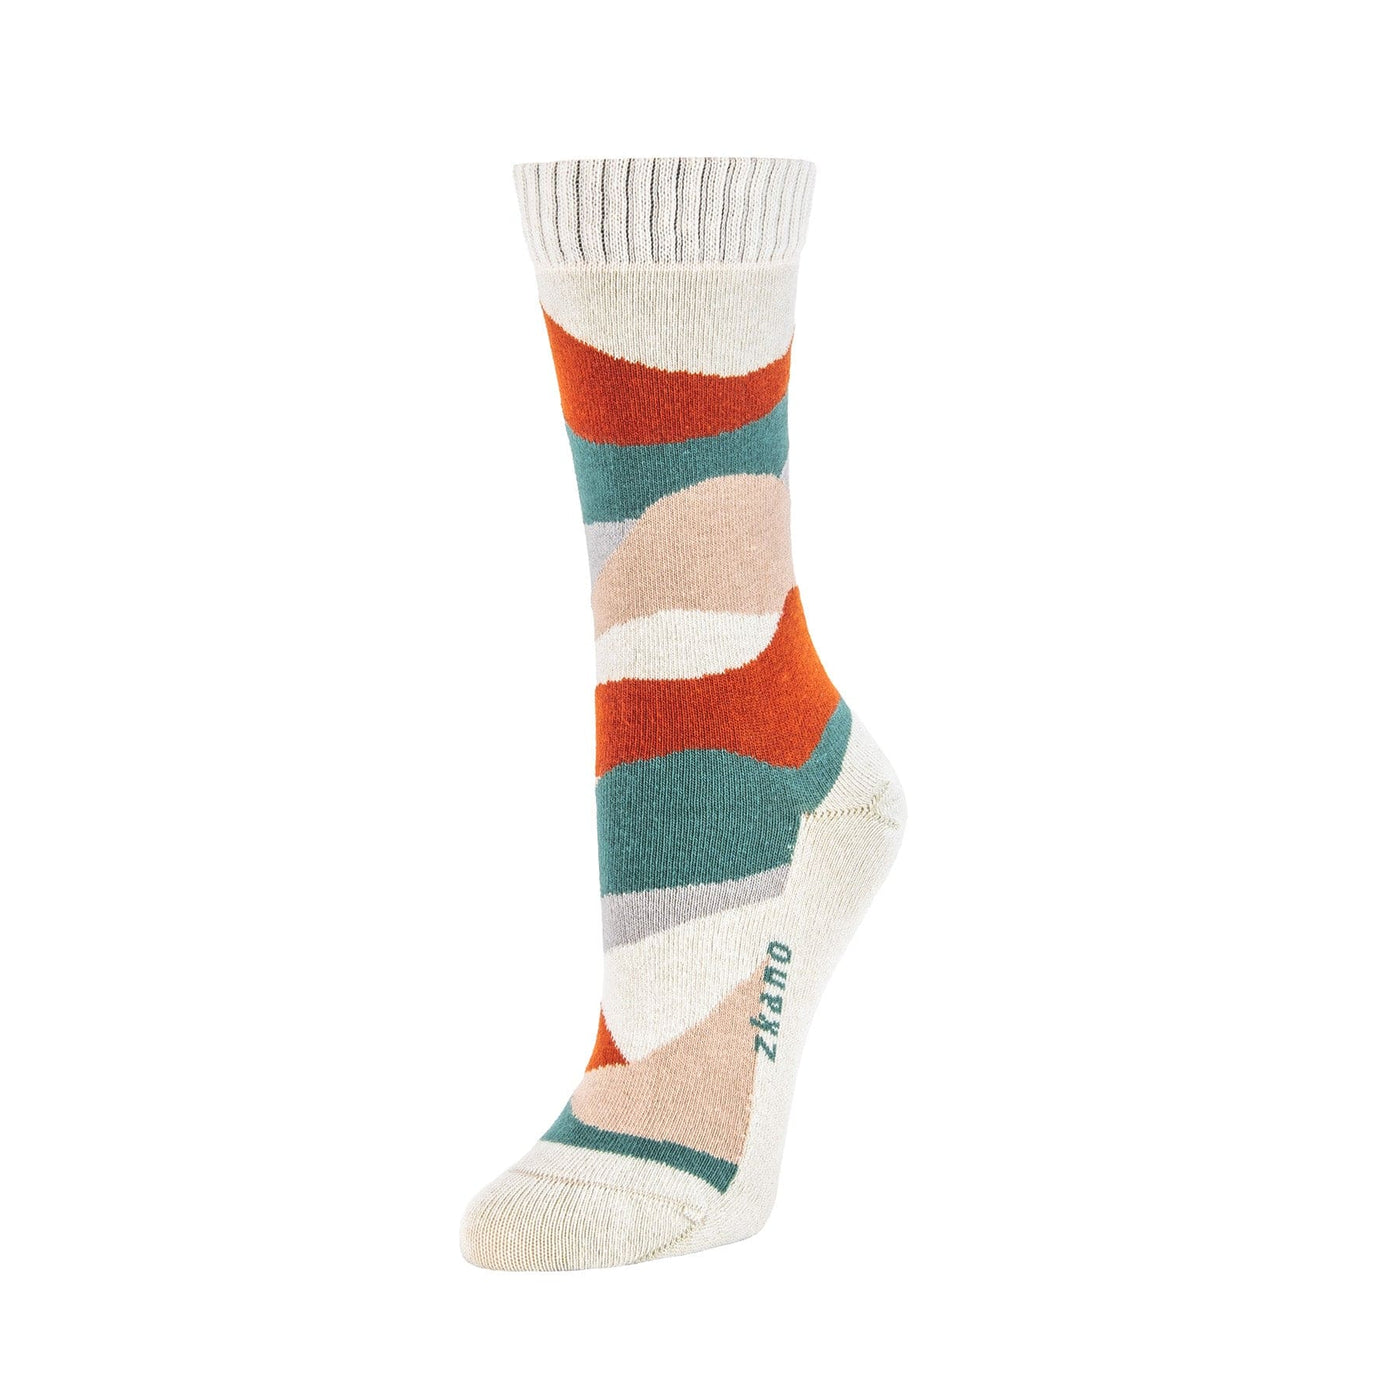 Zkano Crew Medium Dunes - Organic Cotton Crew Socks - Natural organic-socks-made-in-usa